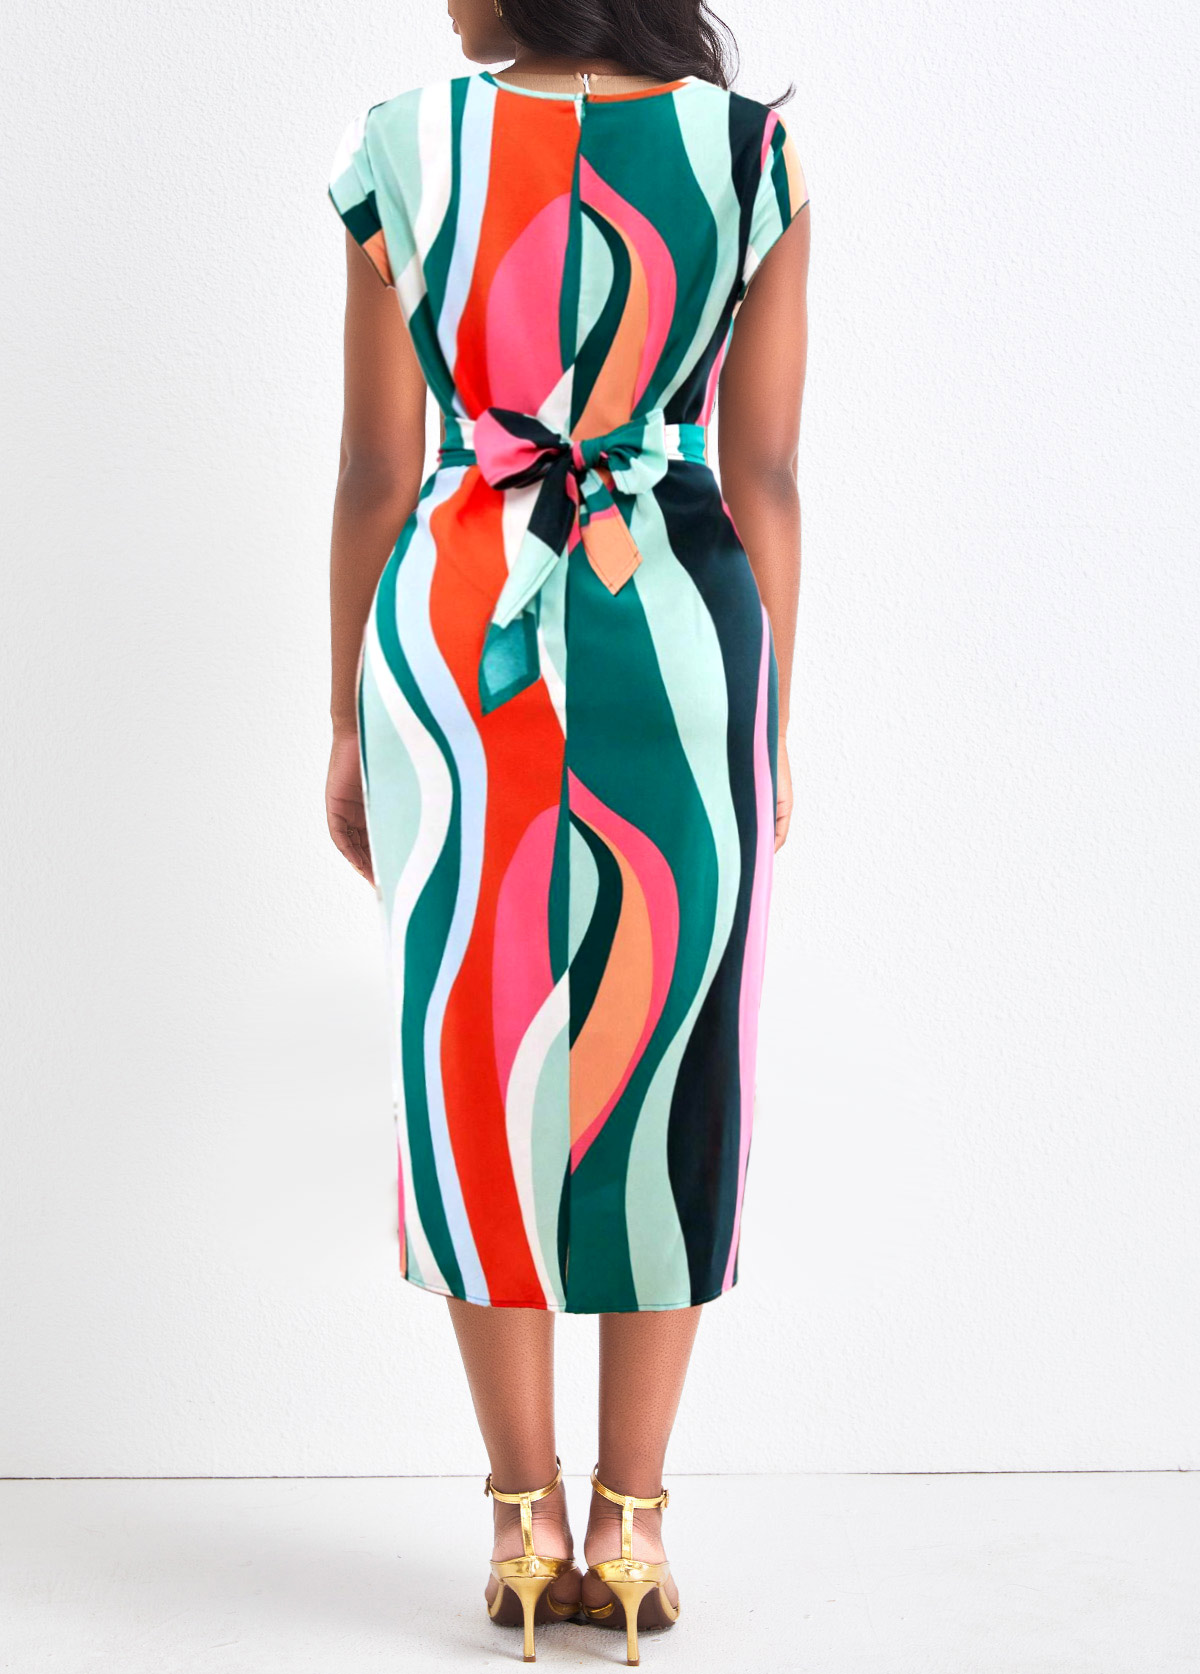 Geometric Print Twist Multi Color Bodycon Dress